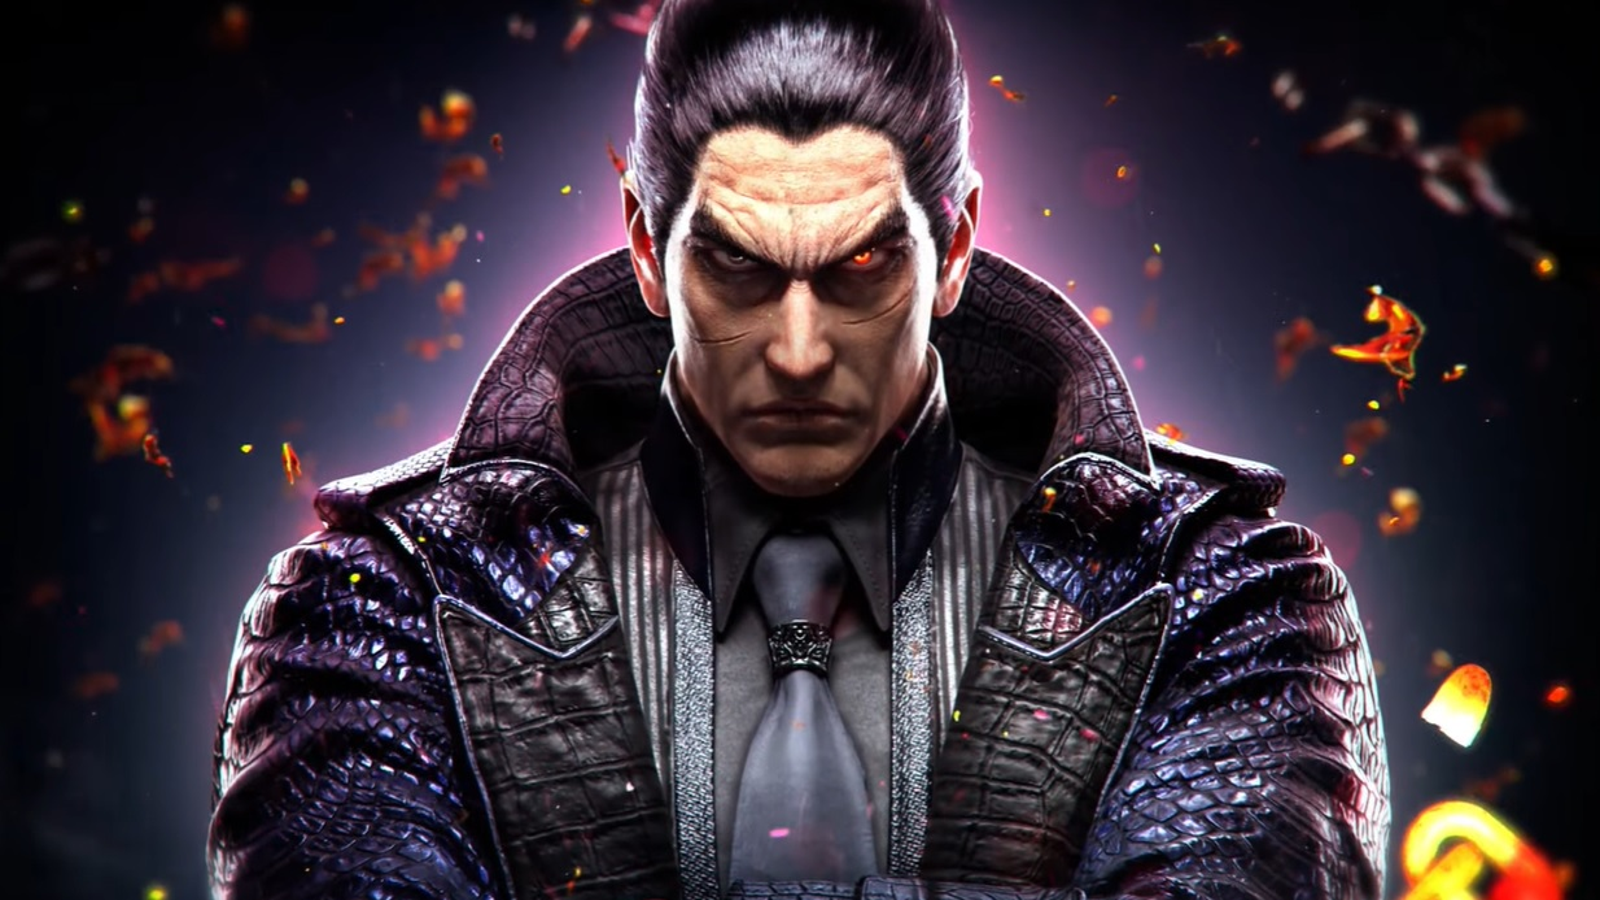 Tekken 8 Release Date - Everything we know